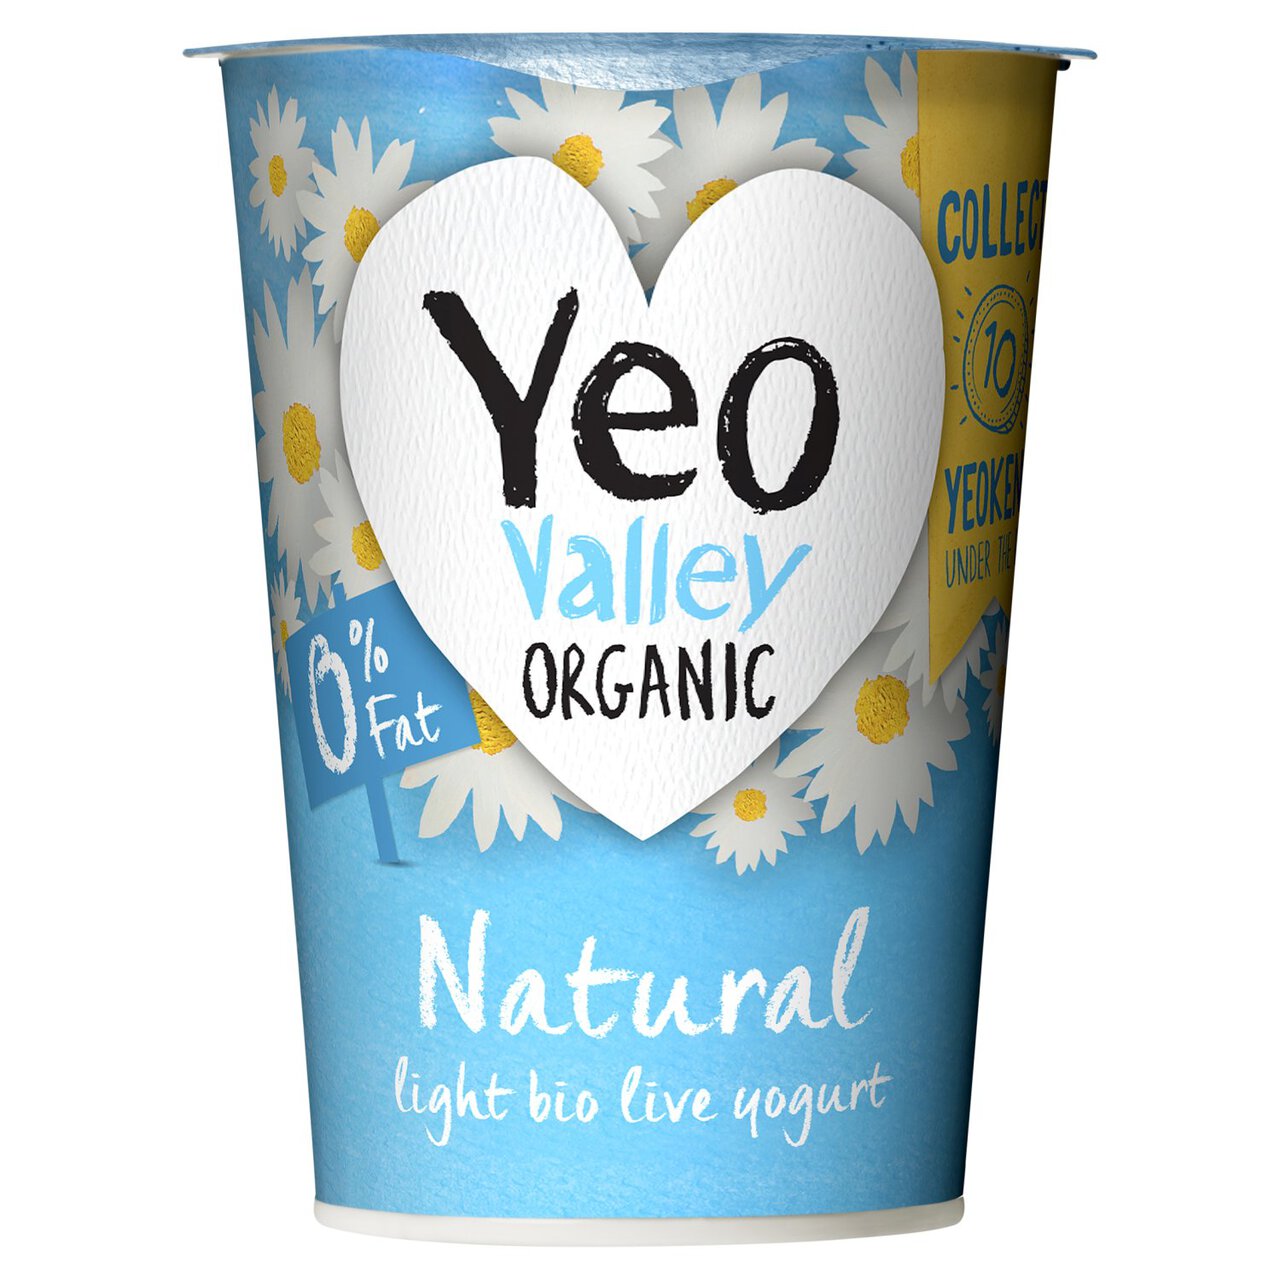 Yeo Valley Organic 0% Fat Natural Yoghurt 450g